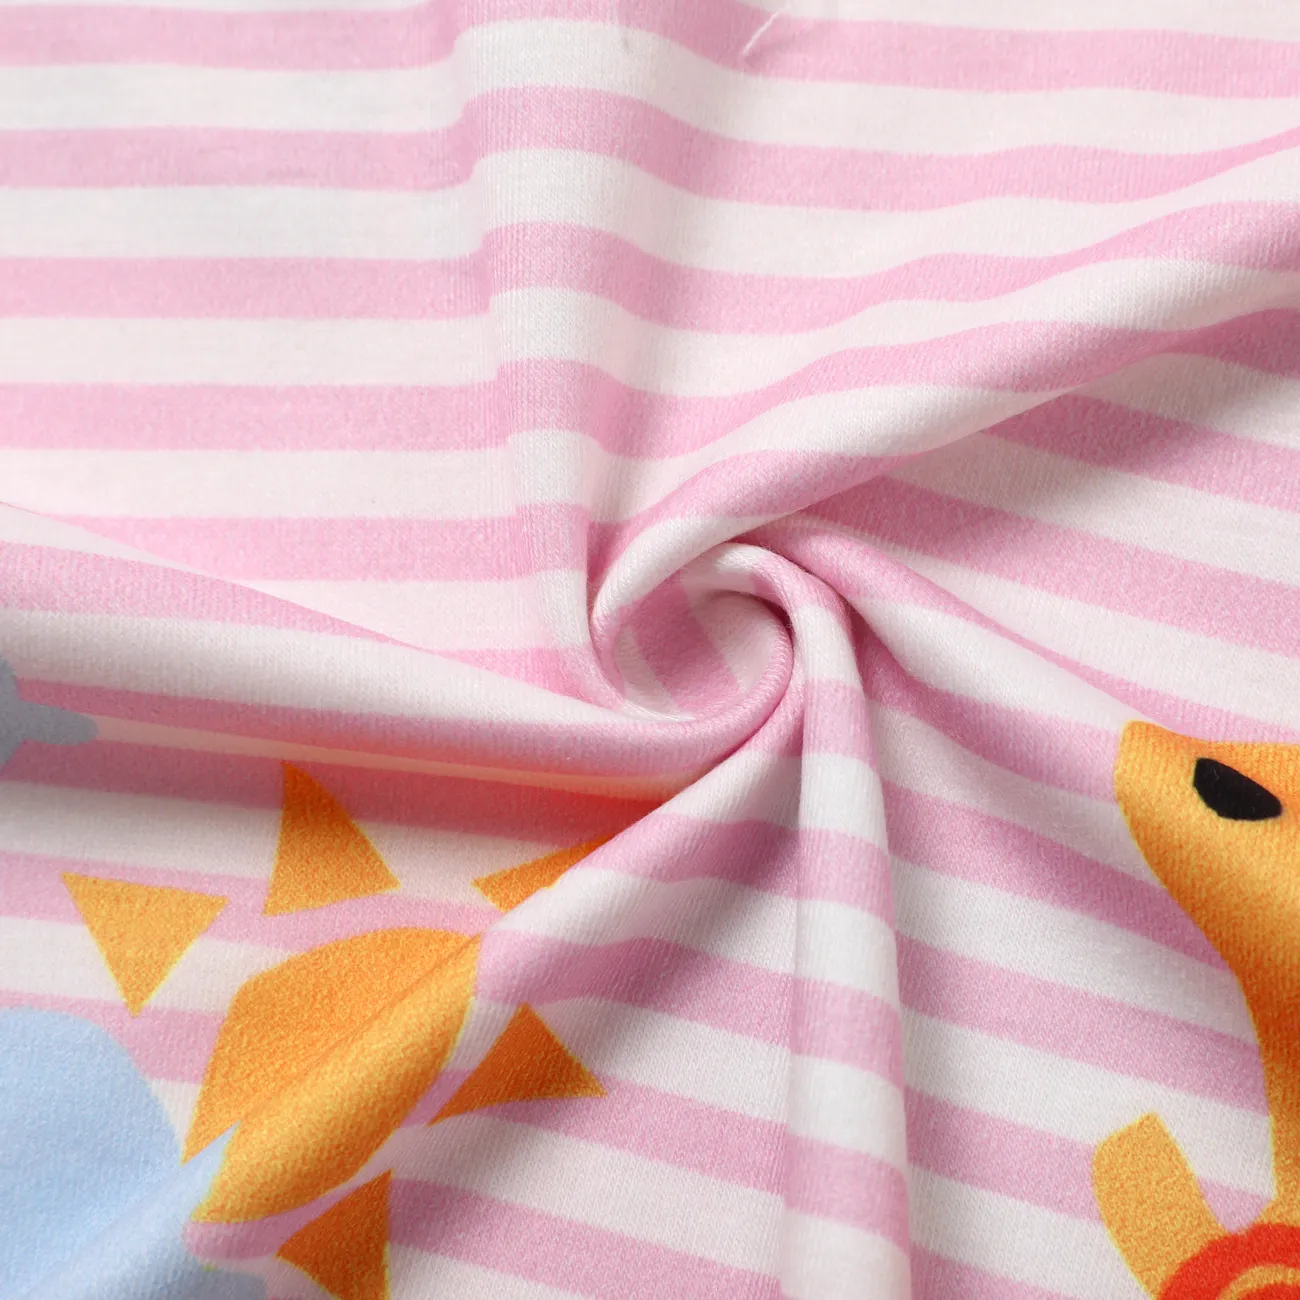 Peppa Pig Toddler Girl/Boy Childlike Stripe Tee Pink big image 1